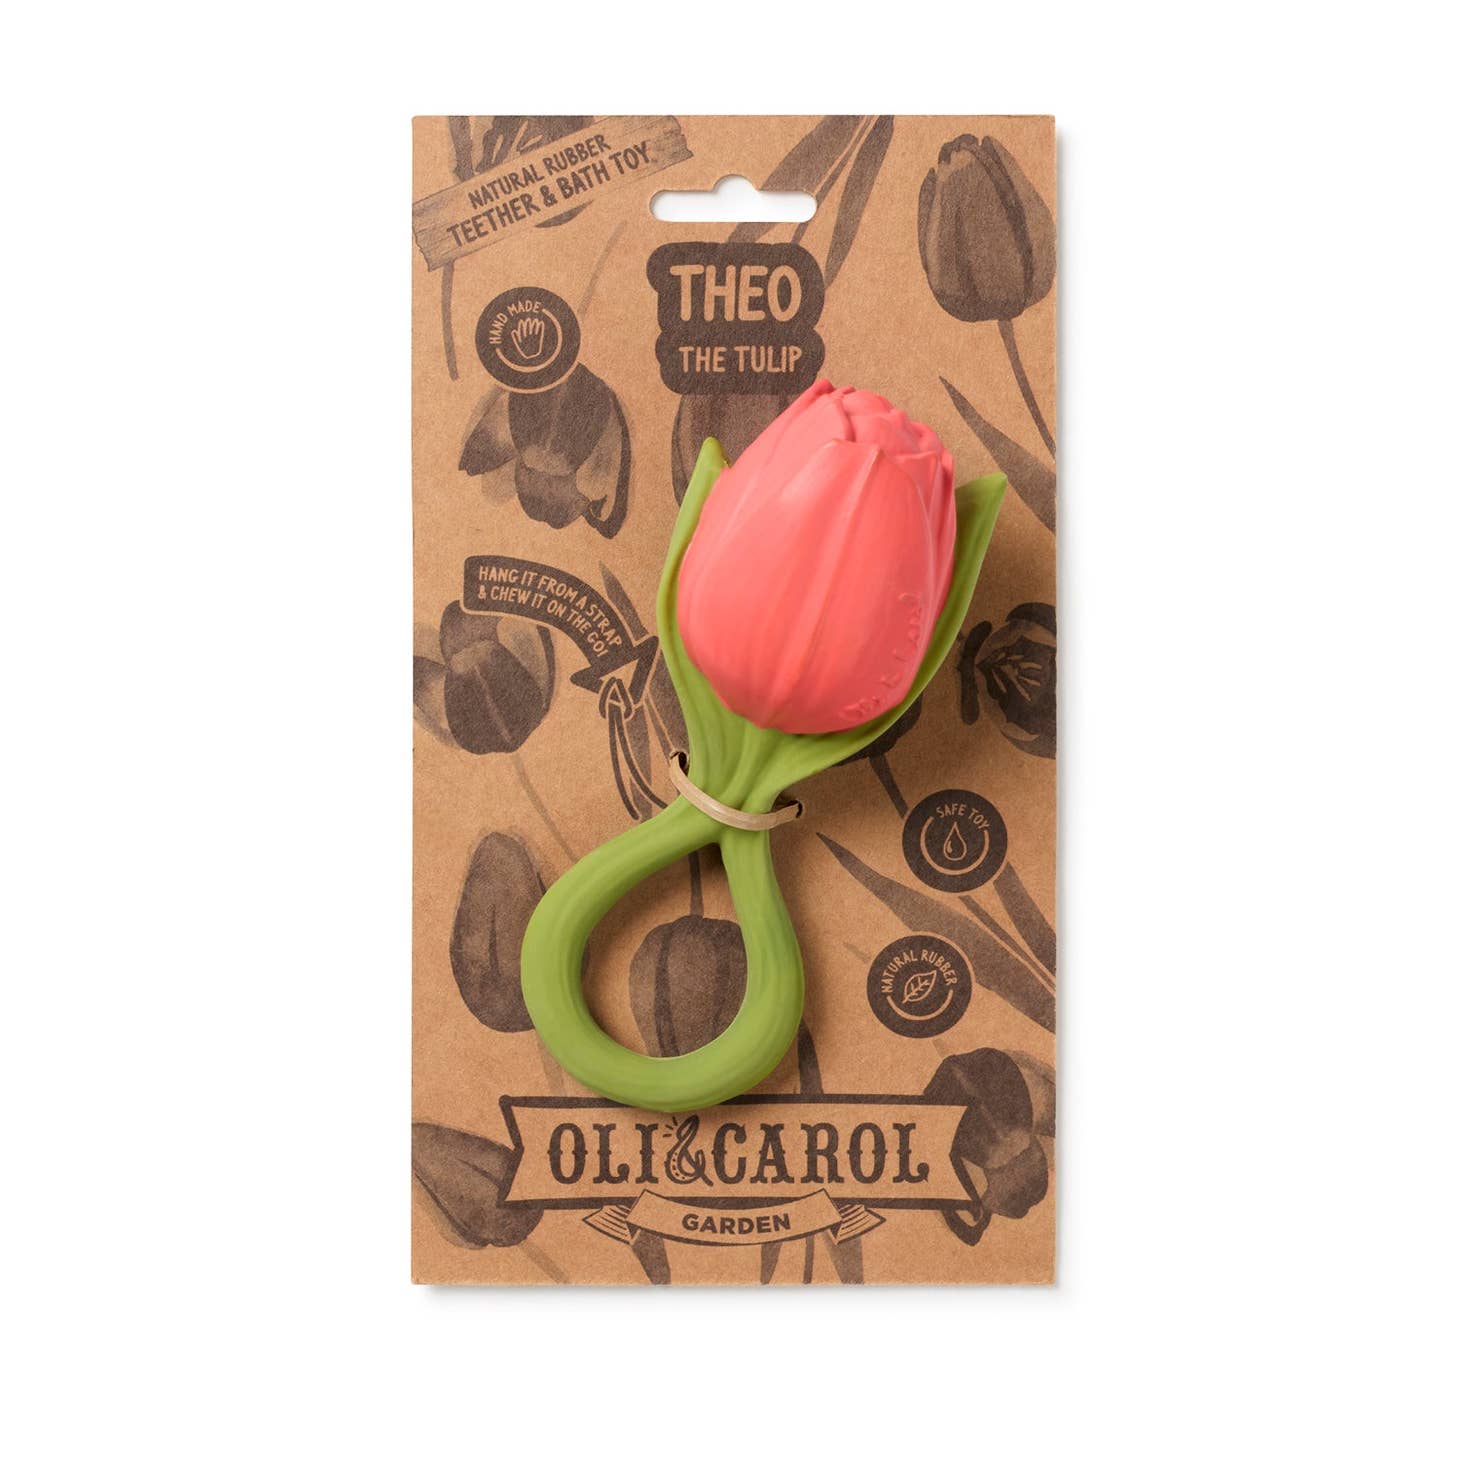 Oli & Carol Theo the Tulip Teether